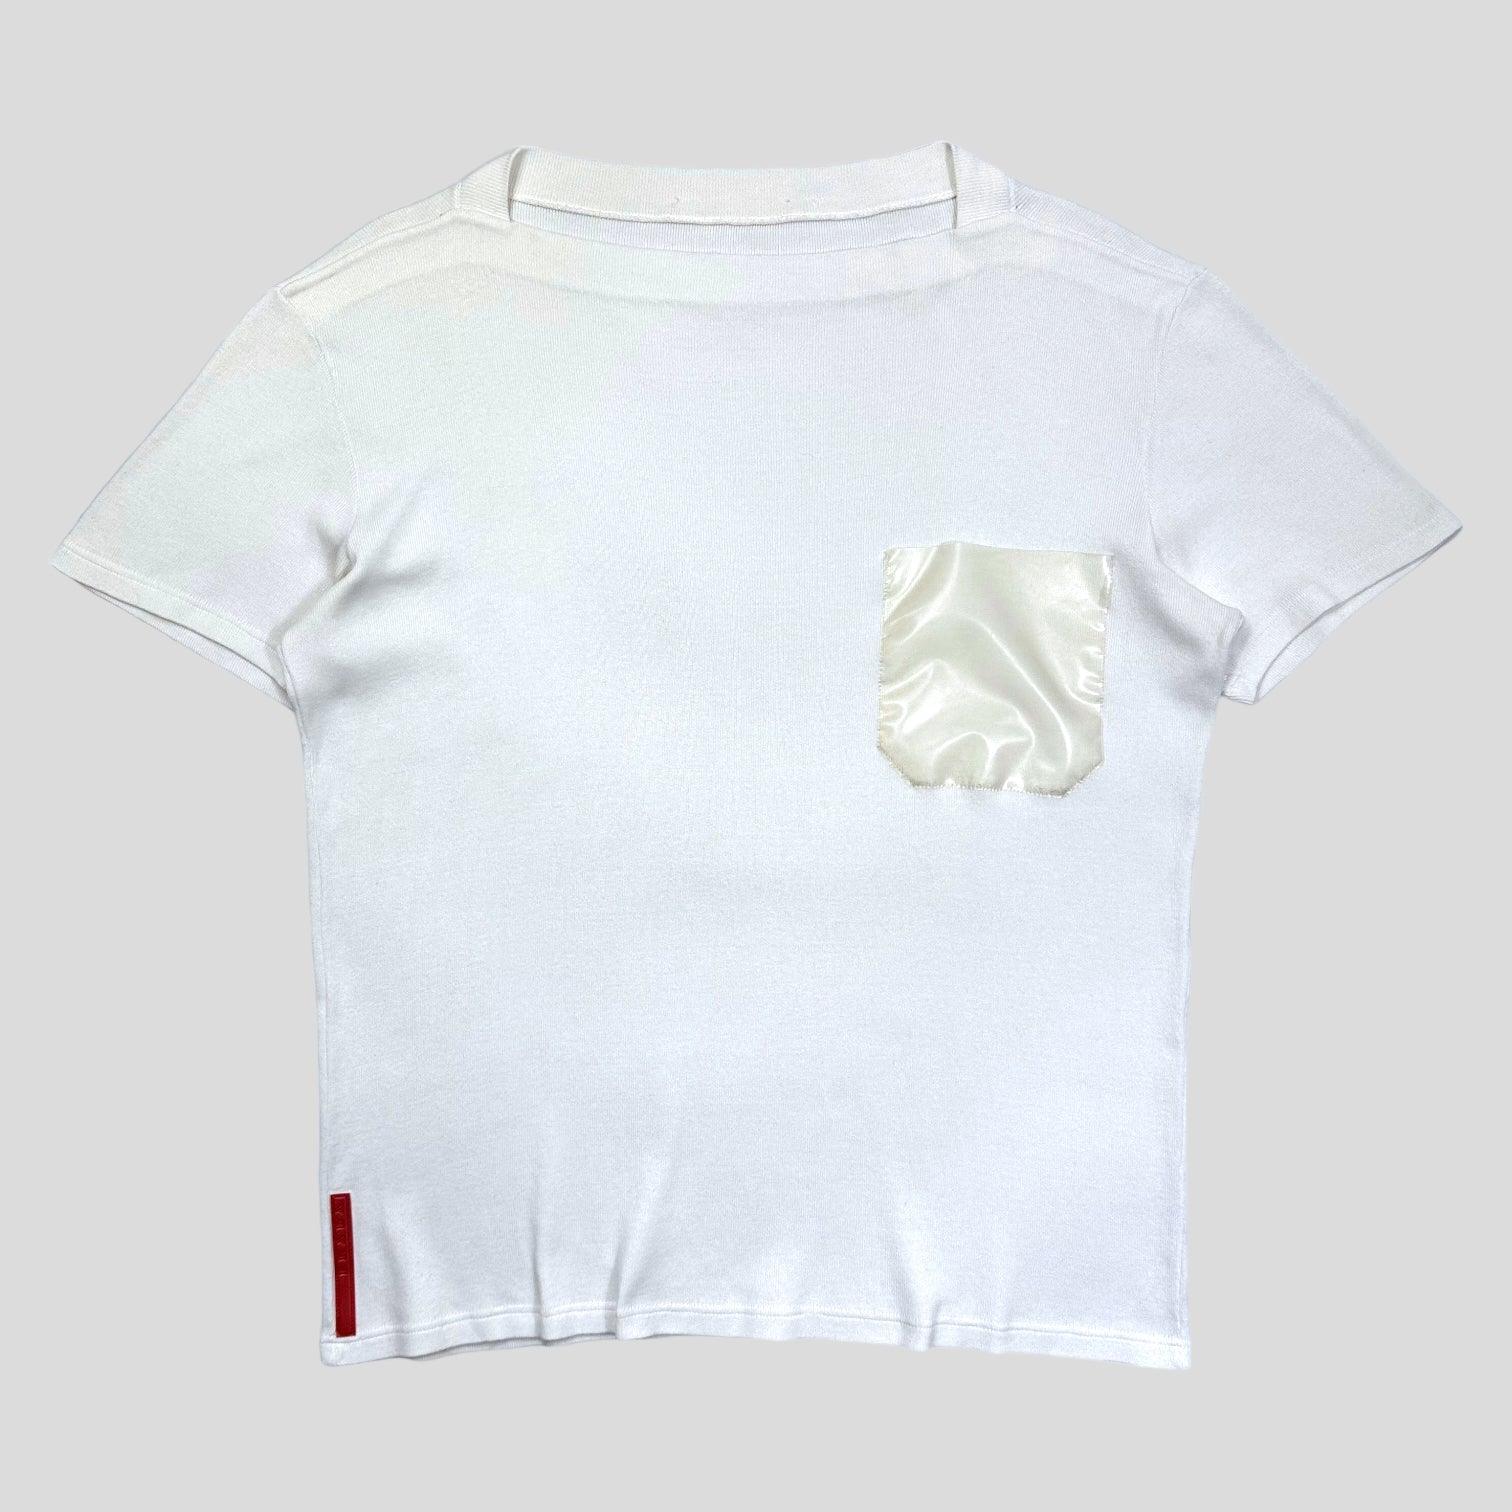 Prada Sport SS99 Latex Pocket T-shirt - M - Known Source